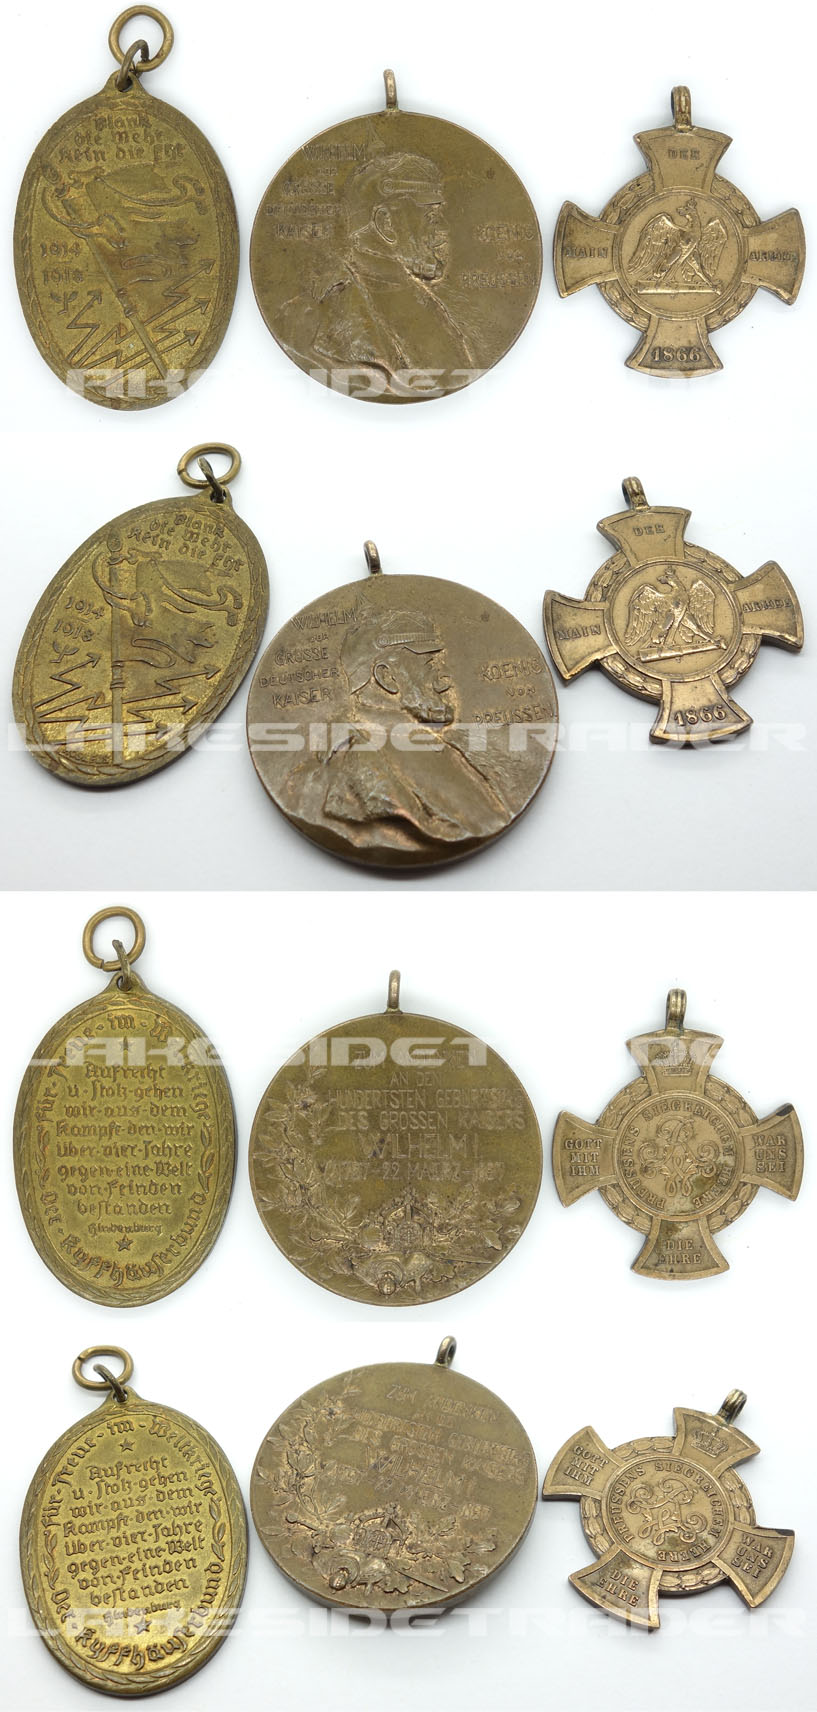 German Imperial era and Veteran Medals